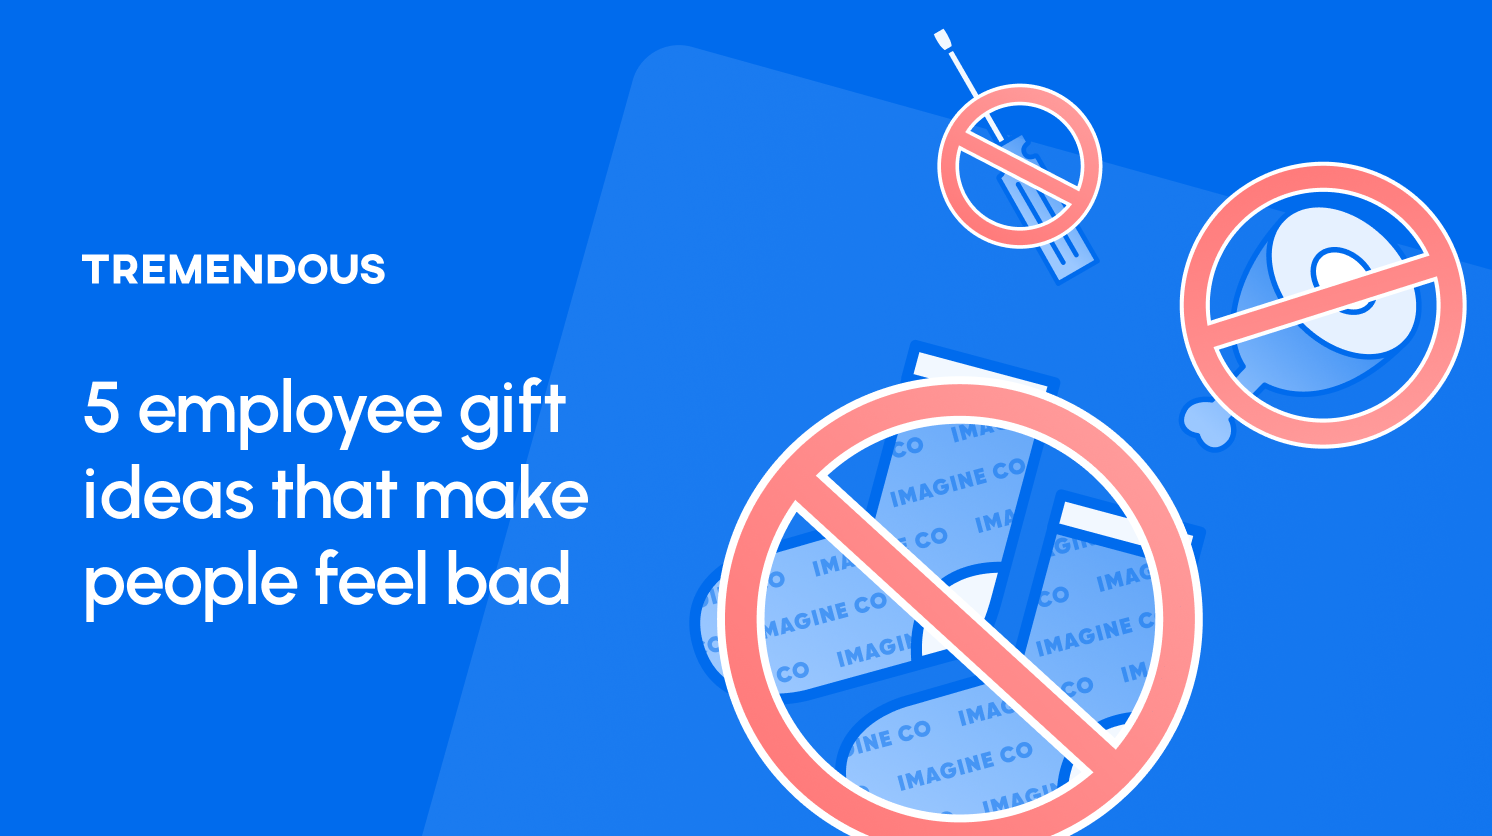 5 employee gift ideas that make people feel bad